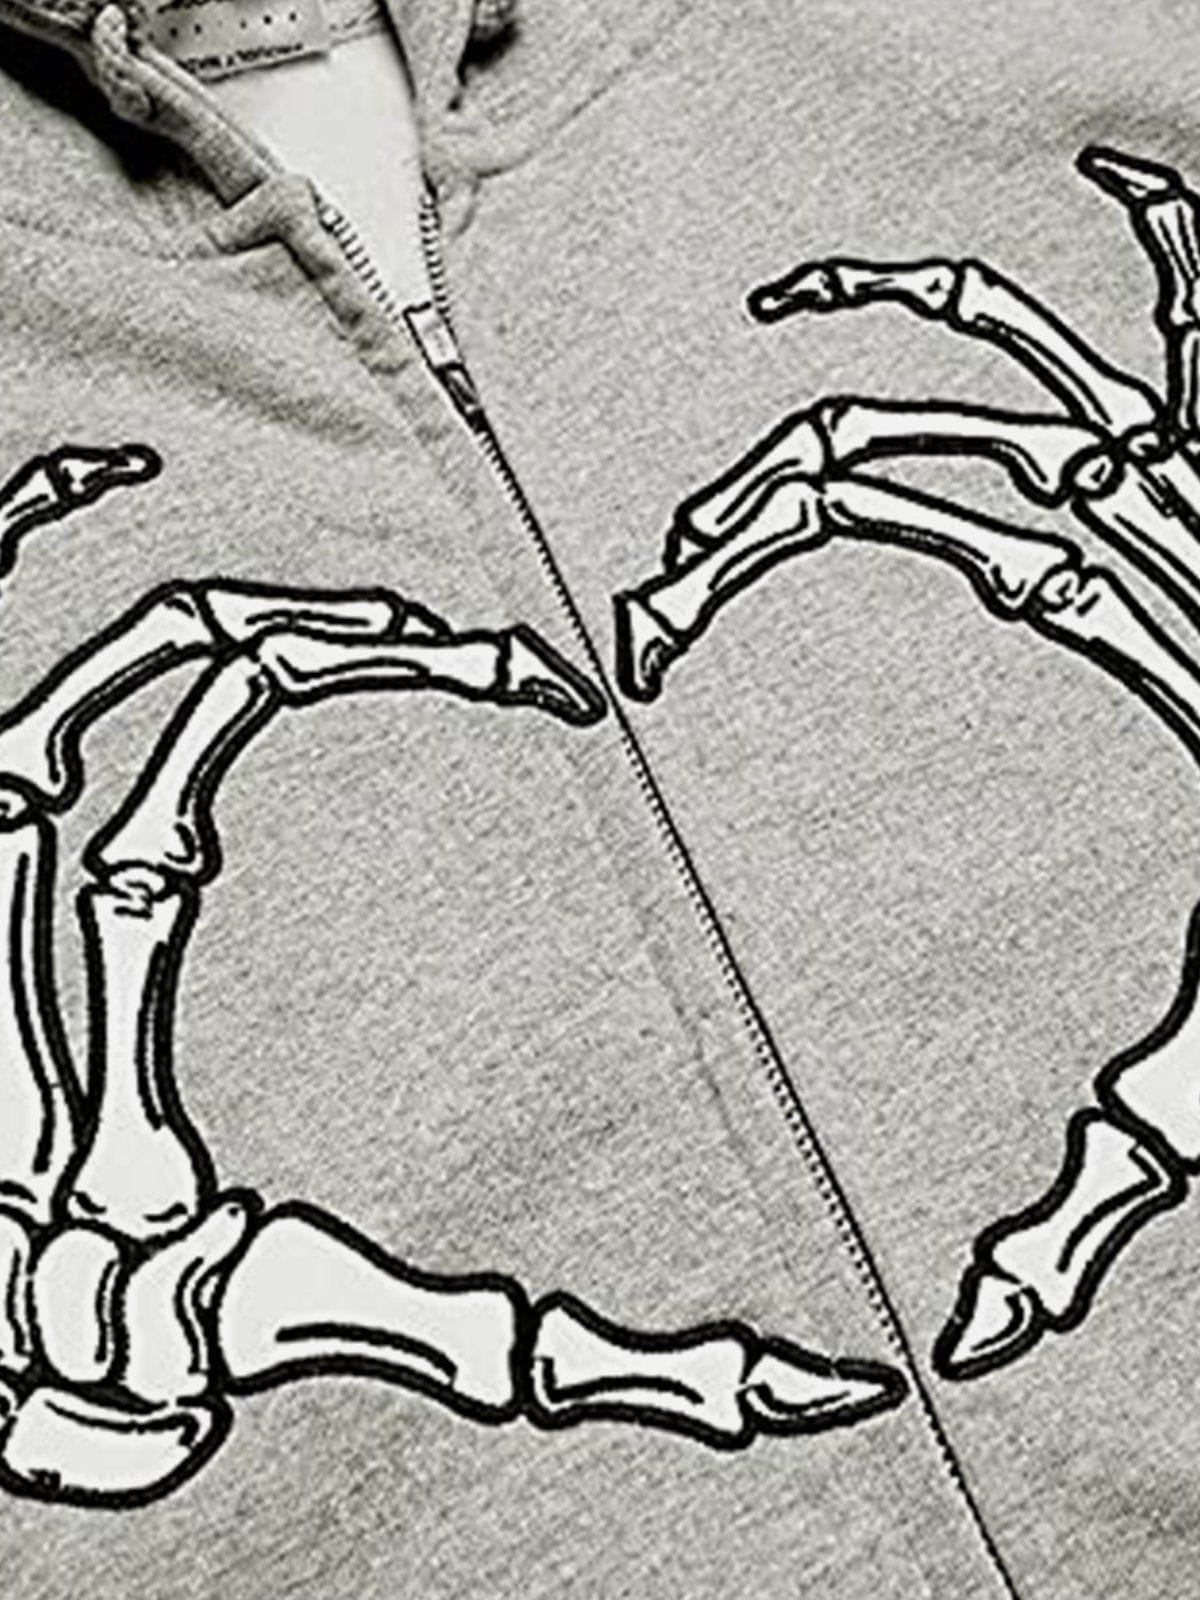 Eprezzy® - Embroidery Heart Skeleton Hoodie Streetwear Fashion - eprezzy.com